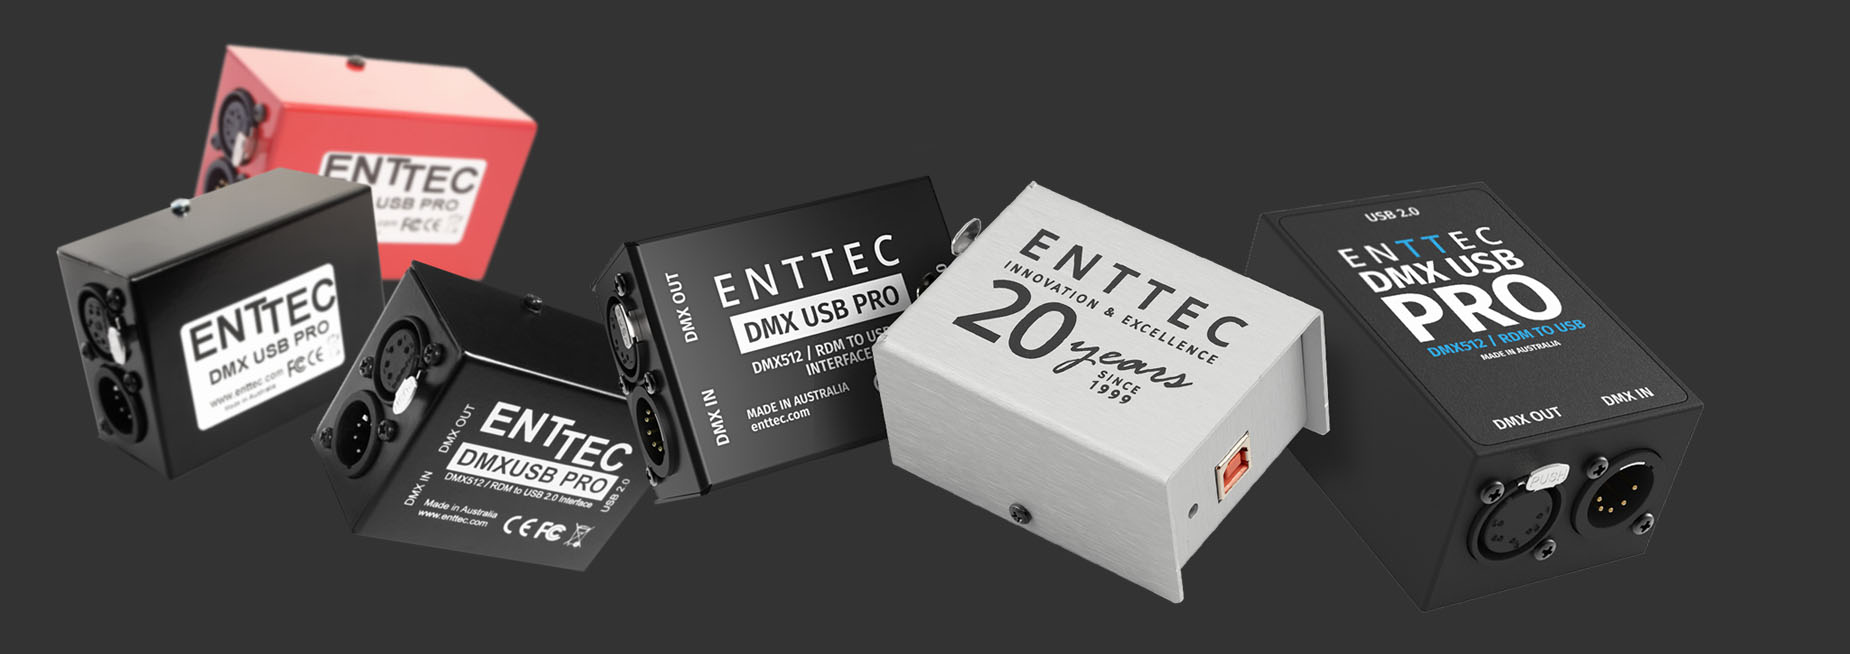 Historic chronology of ENTTEC DMX USB devices.